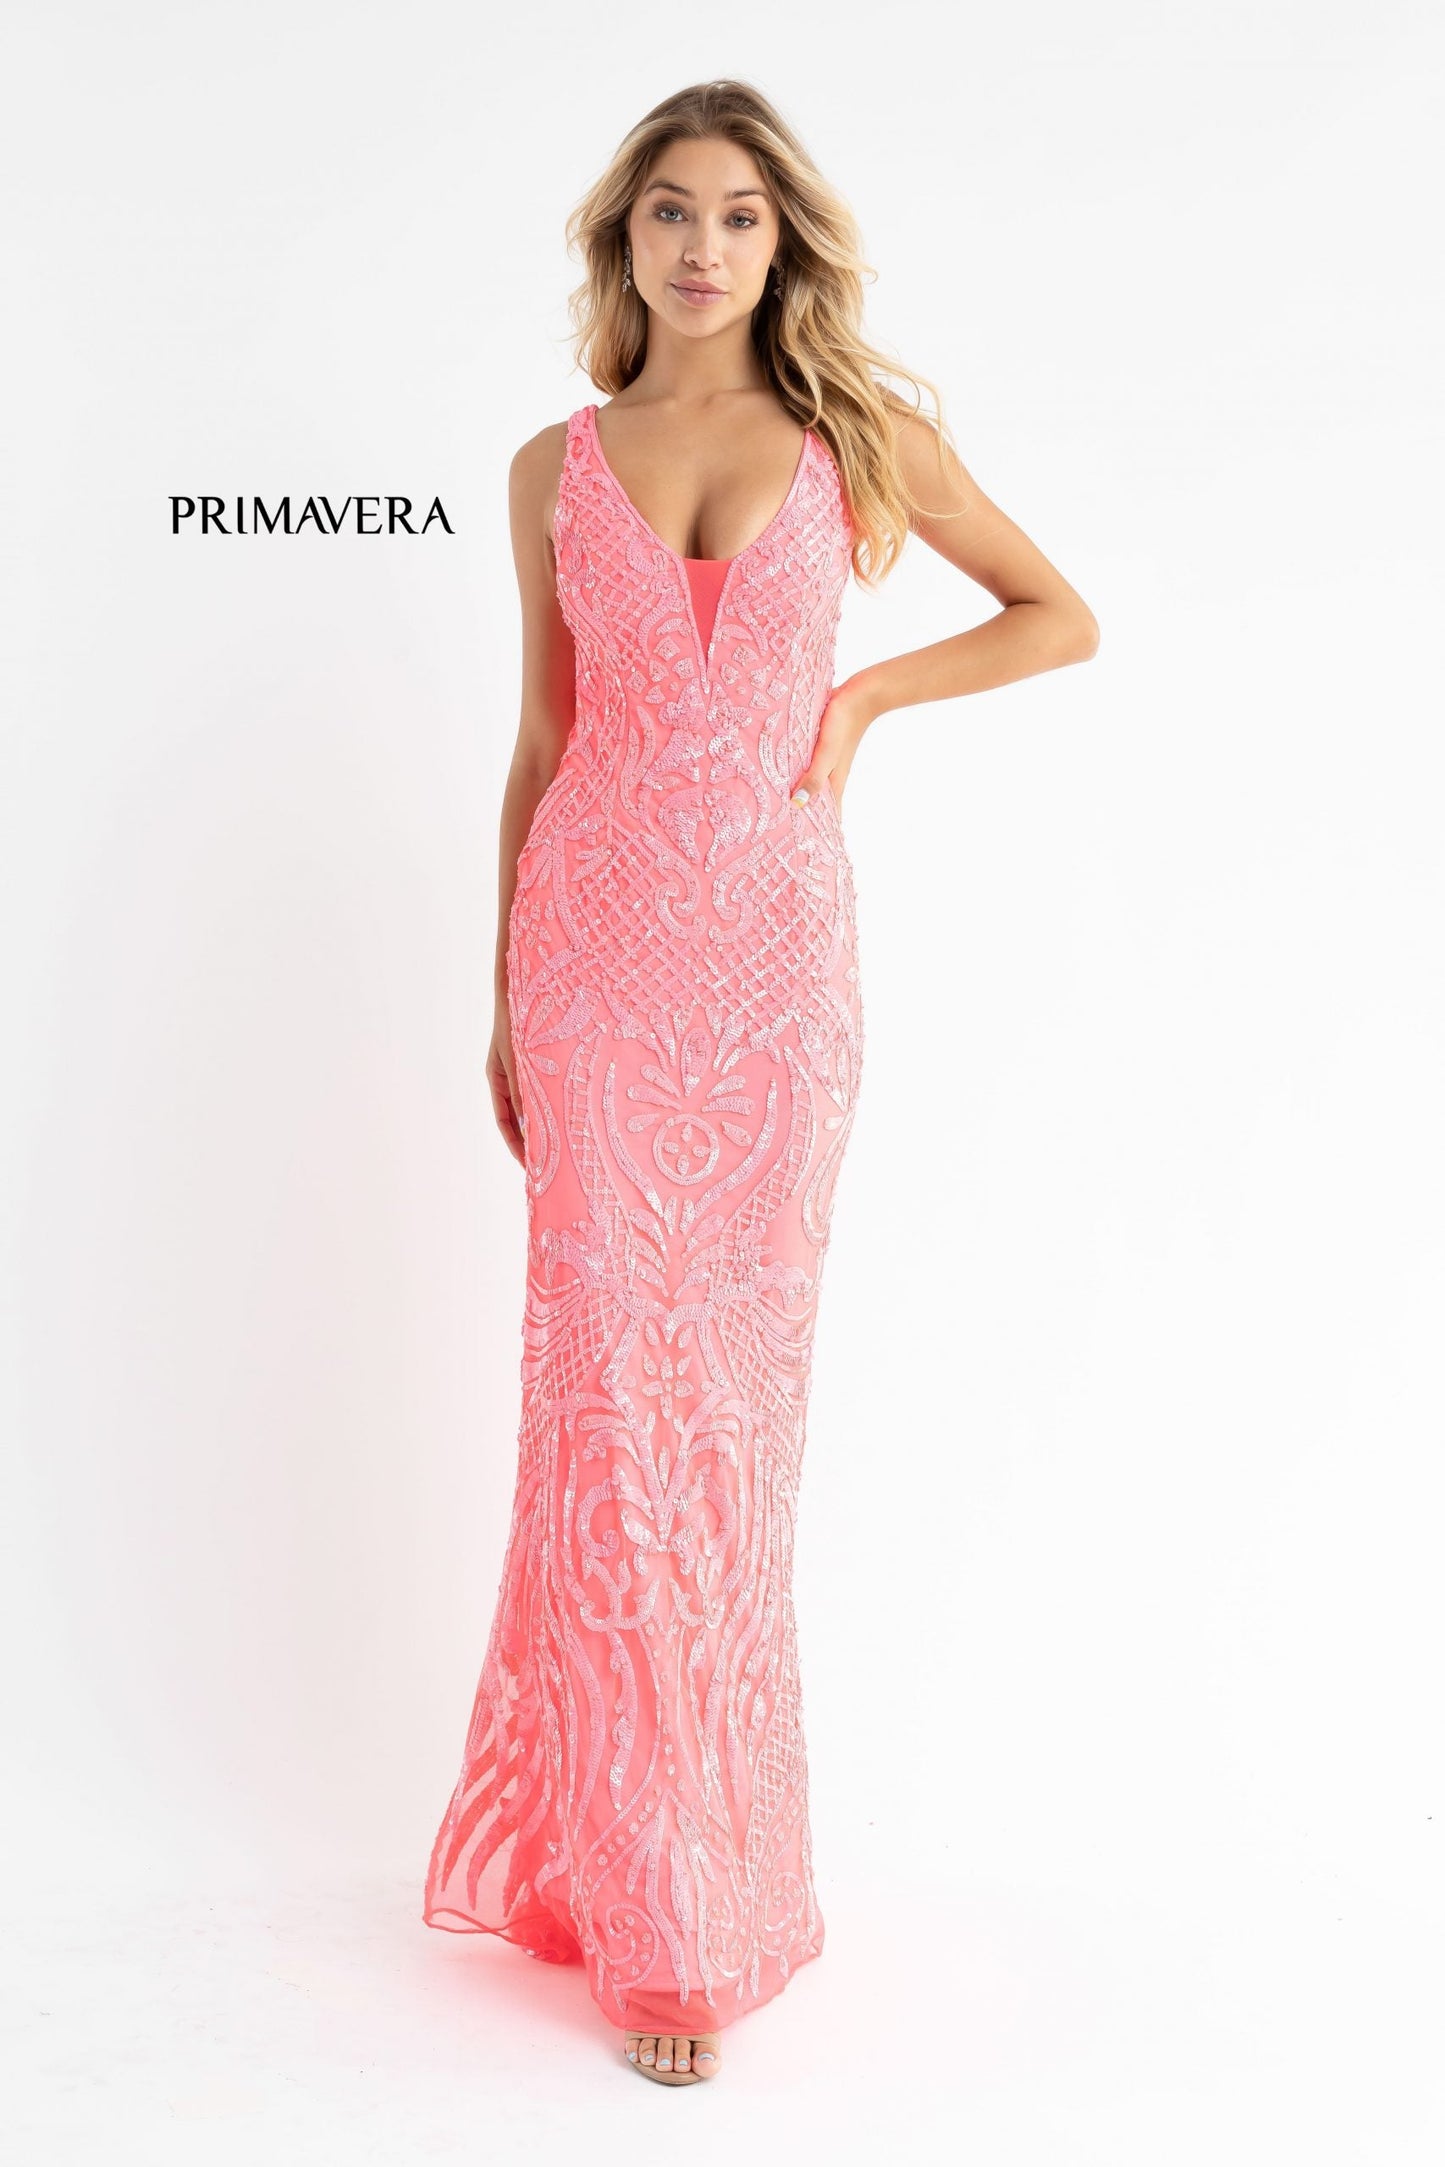 Primavera Couture 3722 Size 24 Iridescent Prom Dress V Neckline V Back Long Sequins Evening Gown